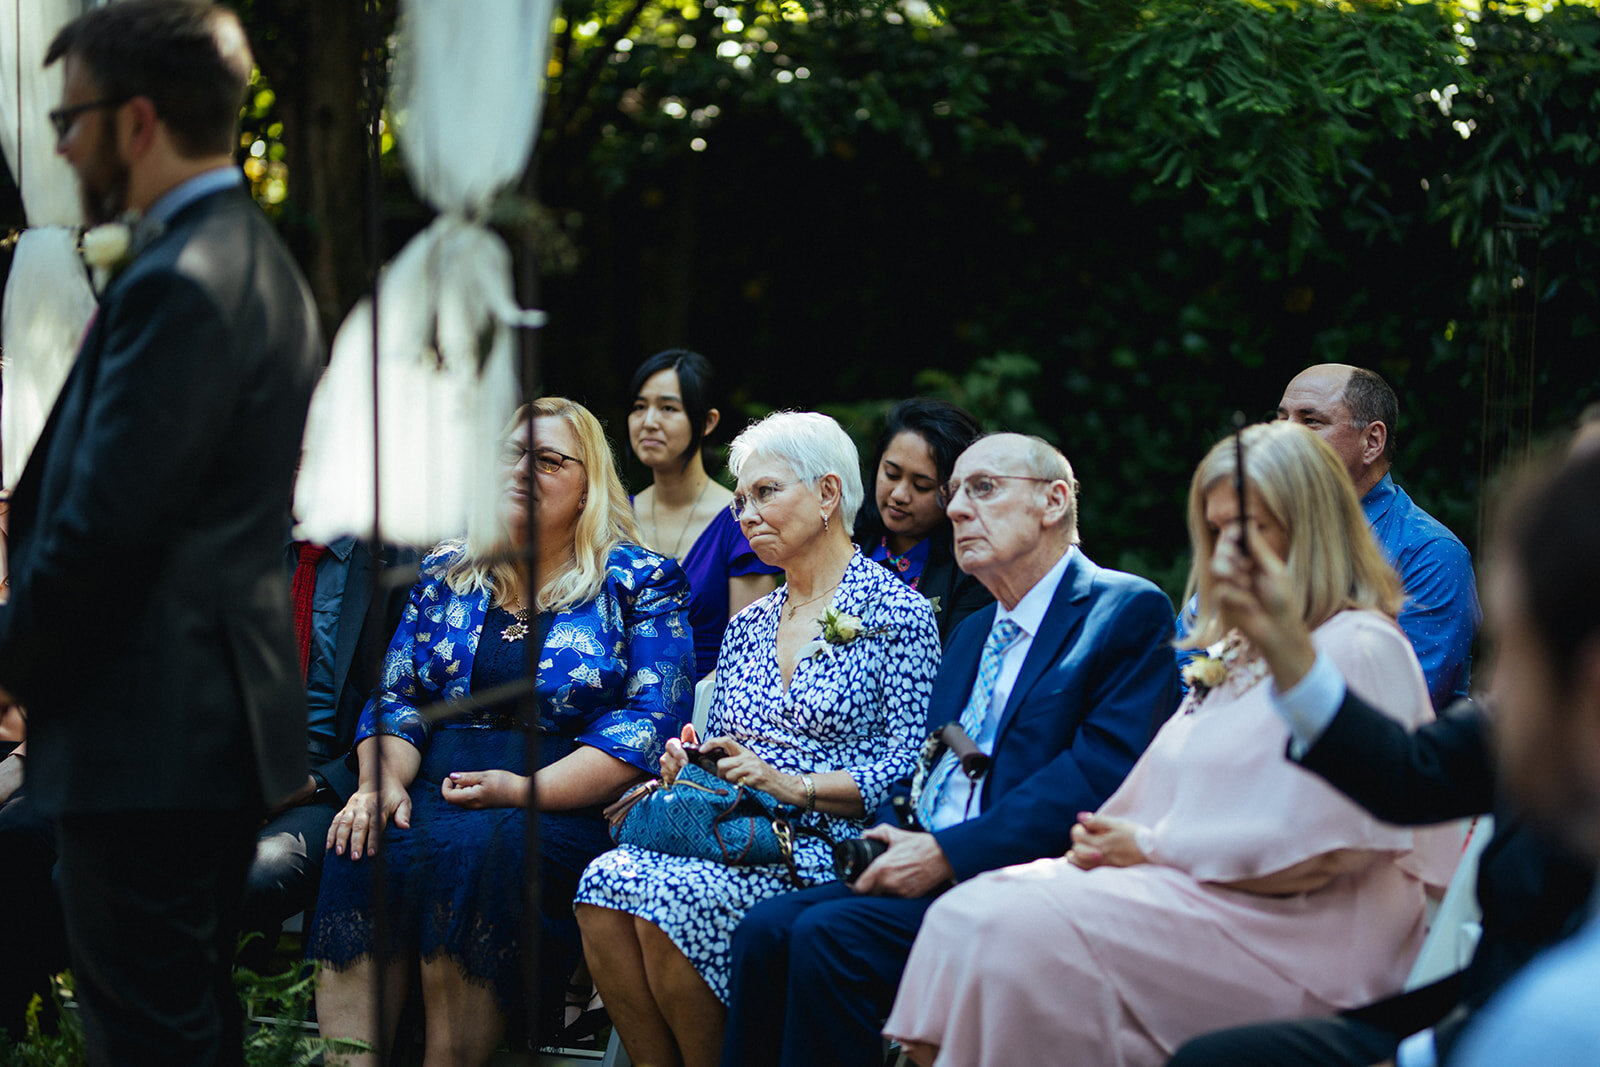 Guests watching a backyard wedding in Atlanta Ga Shawnee Custalow Queer Wedding Photographer